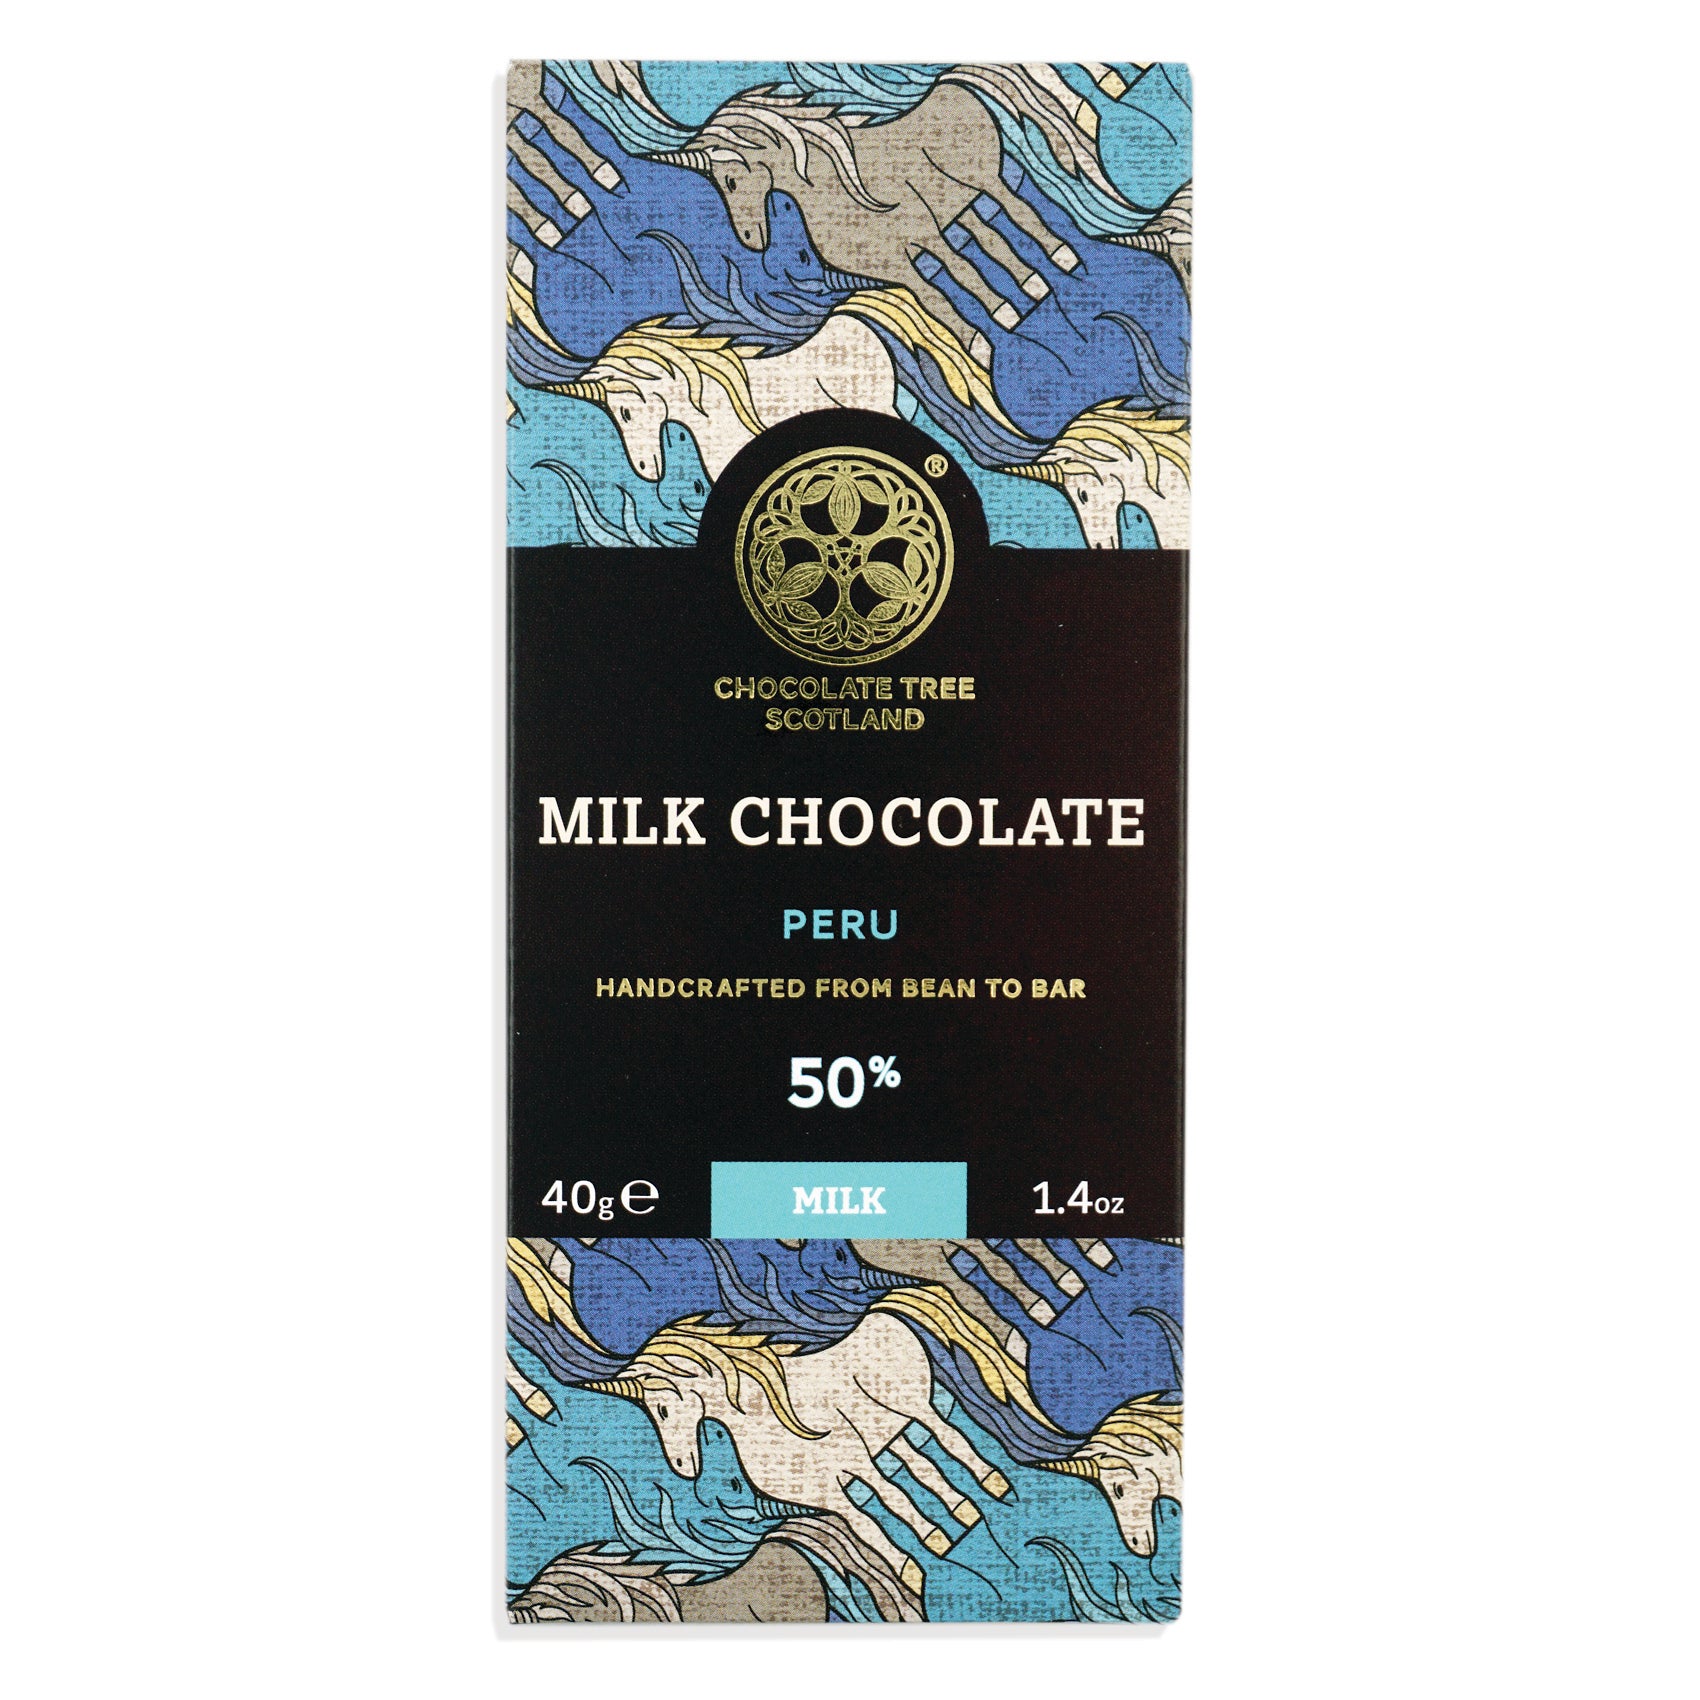 A bar of Chocolate Tree Peru 50% milk chocolate